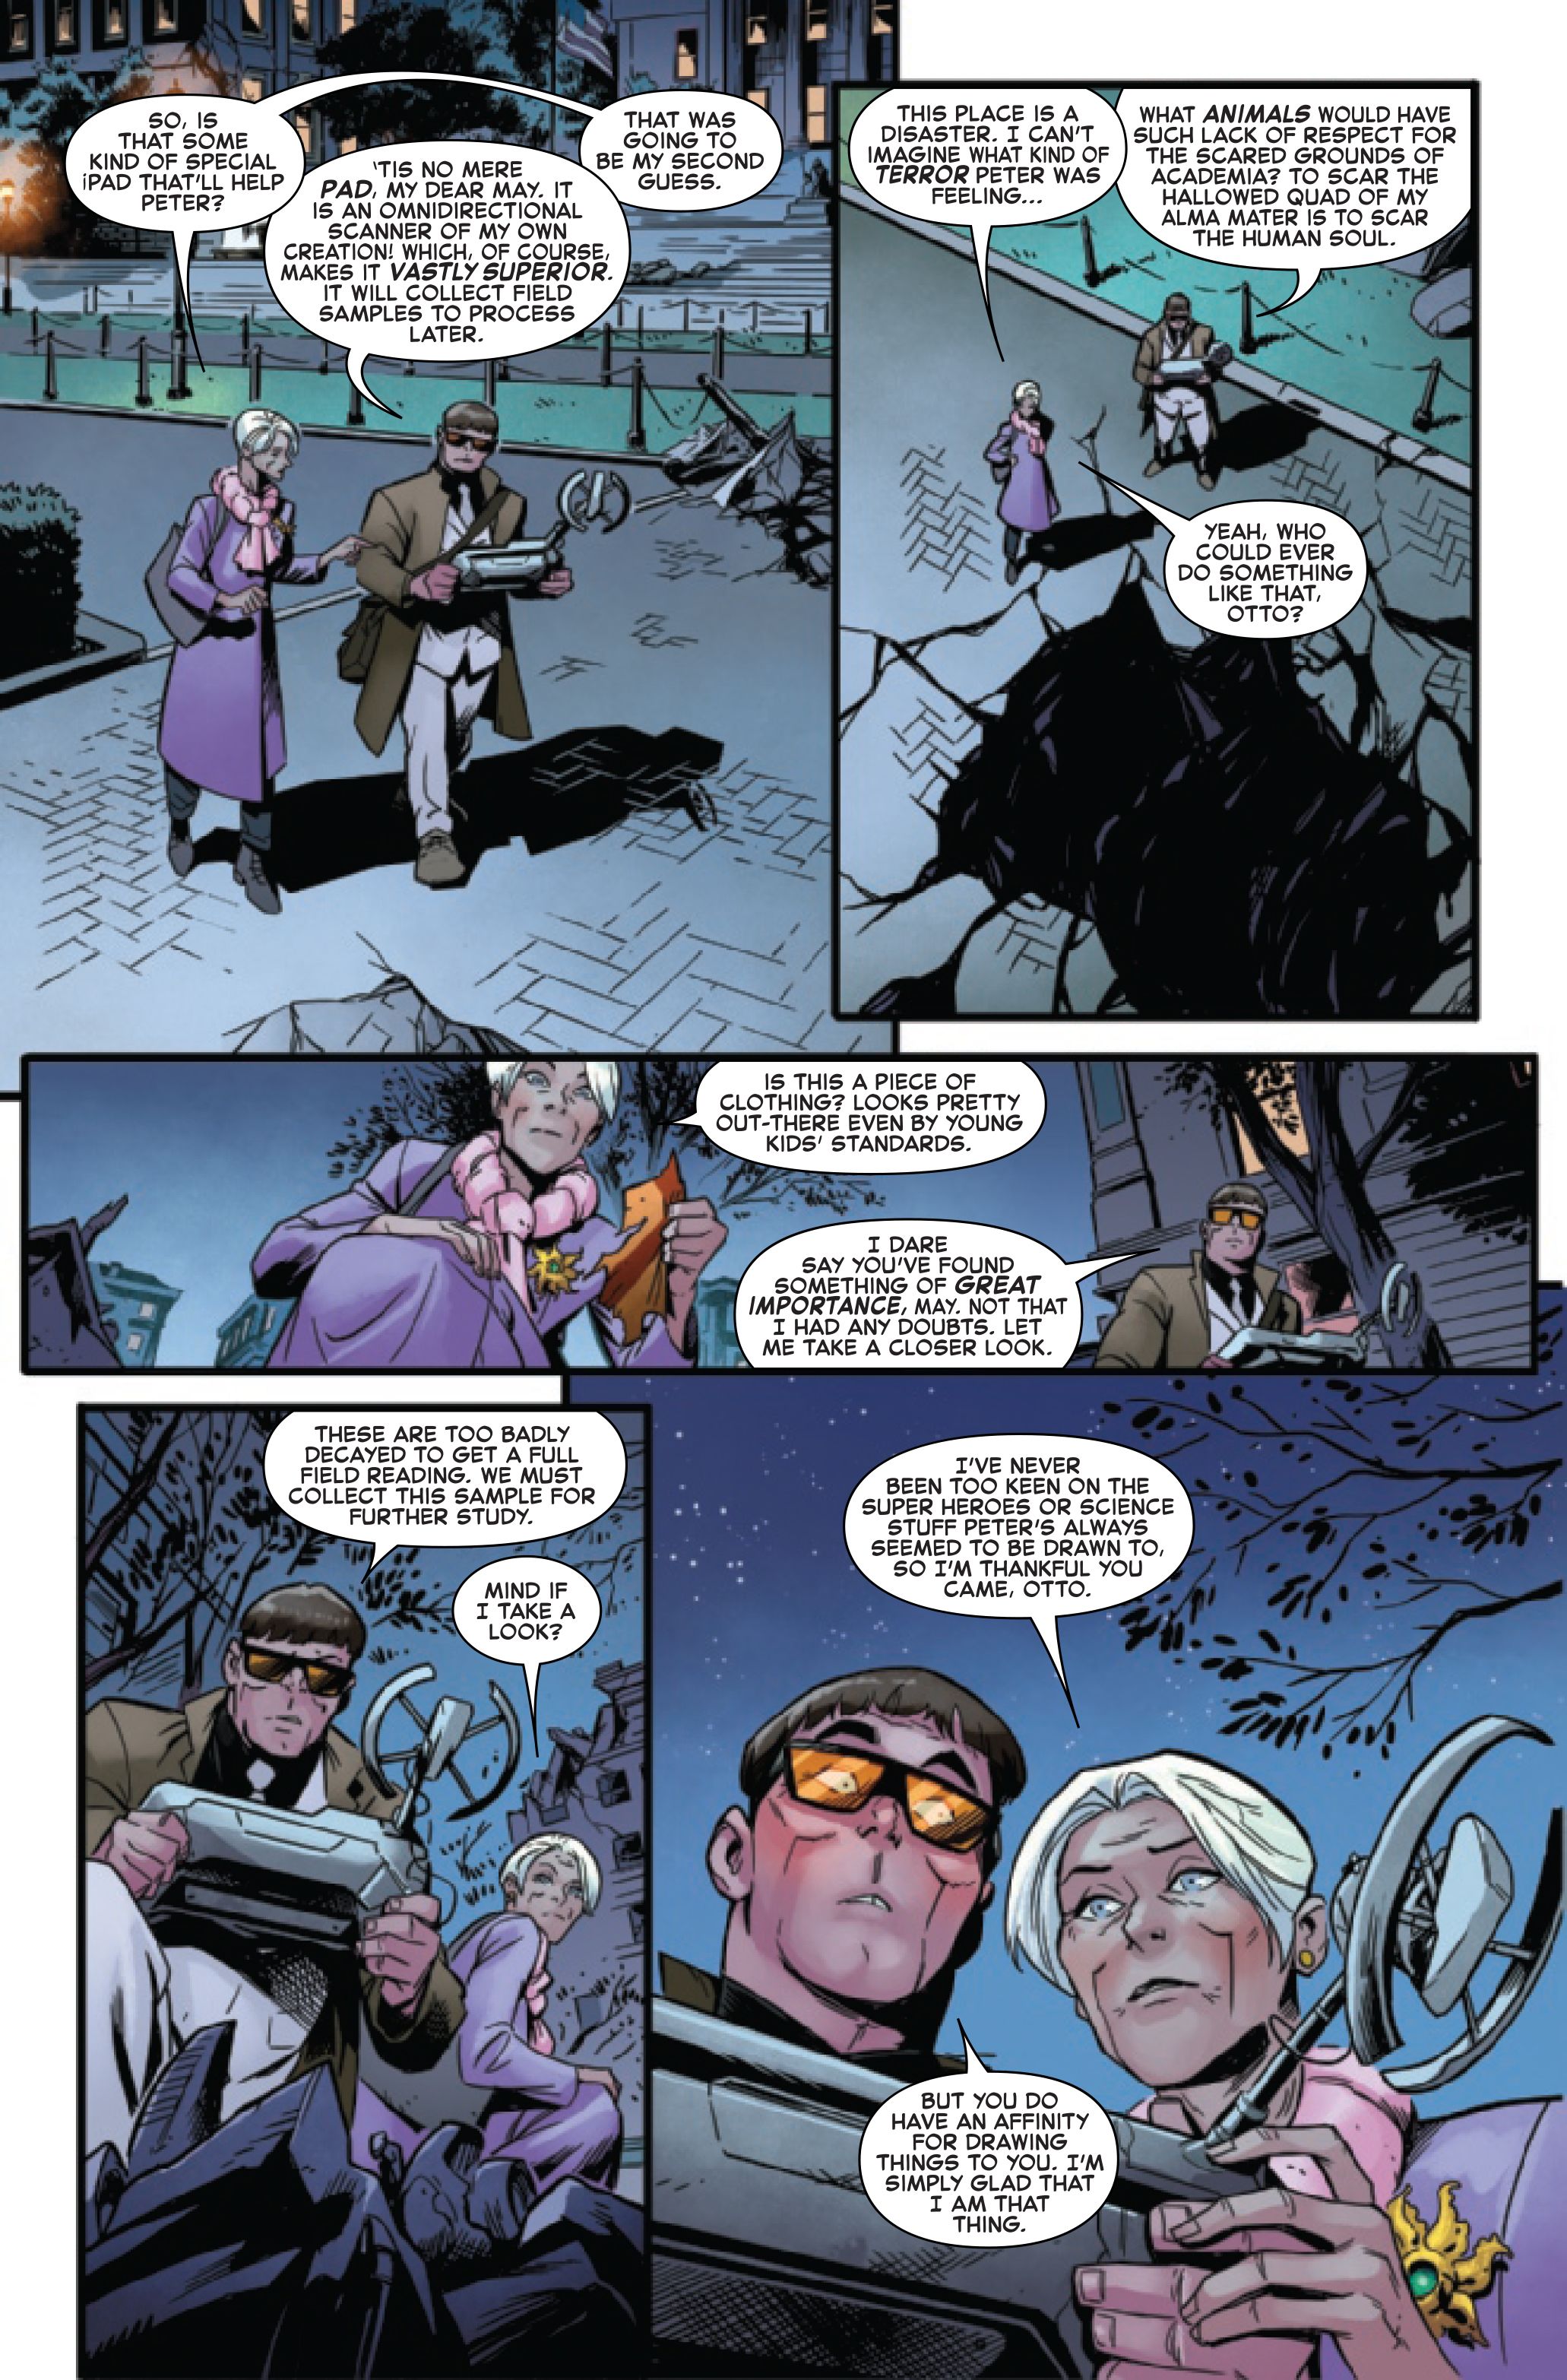 Page 4 of Amazing Spider-Man #80.BEY, by Cody Ziglar, Ivan Fiorelli, Carlos Gomez and Paco Medina.